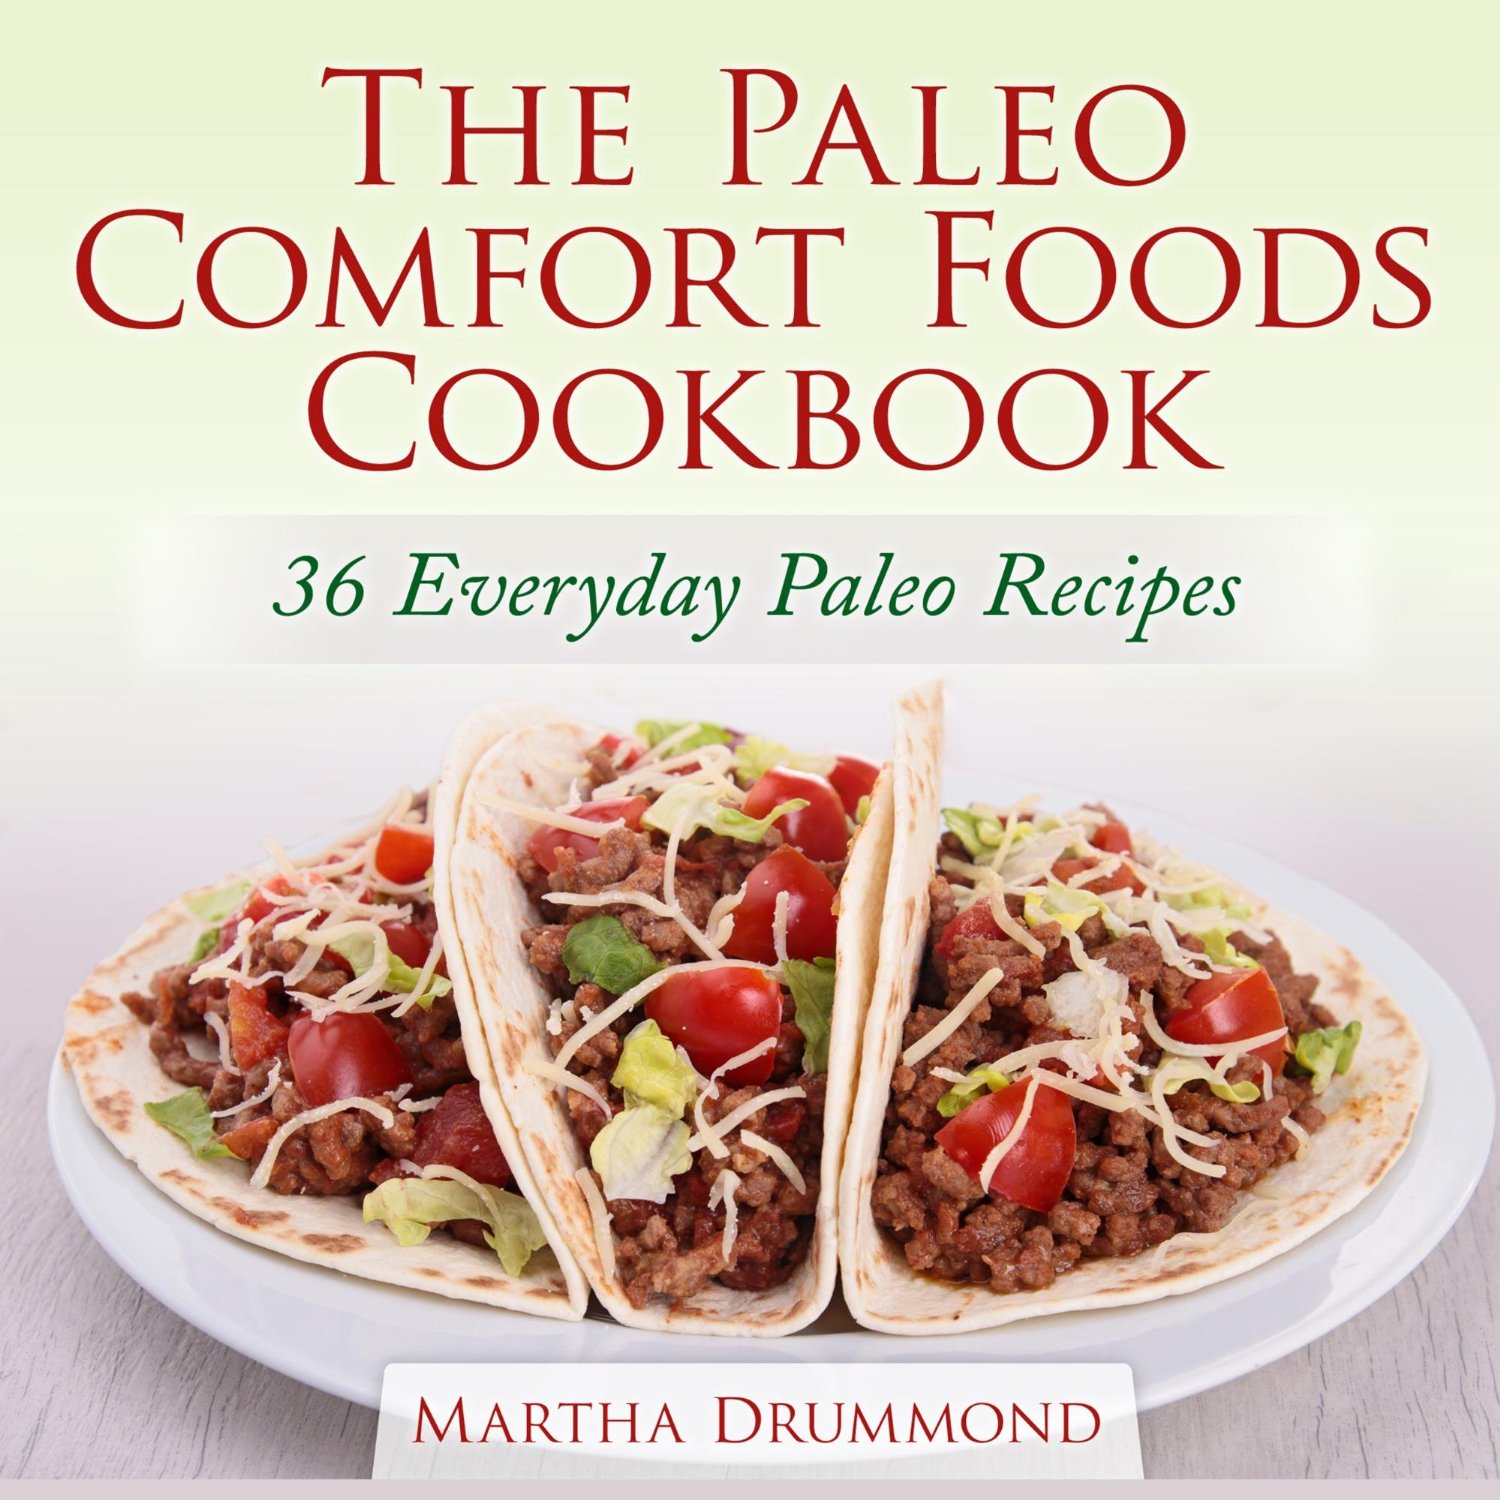 FREE: The Paleo Comfort Foods Cookbook by Graham MacDonald